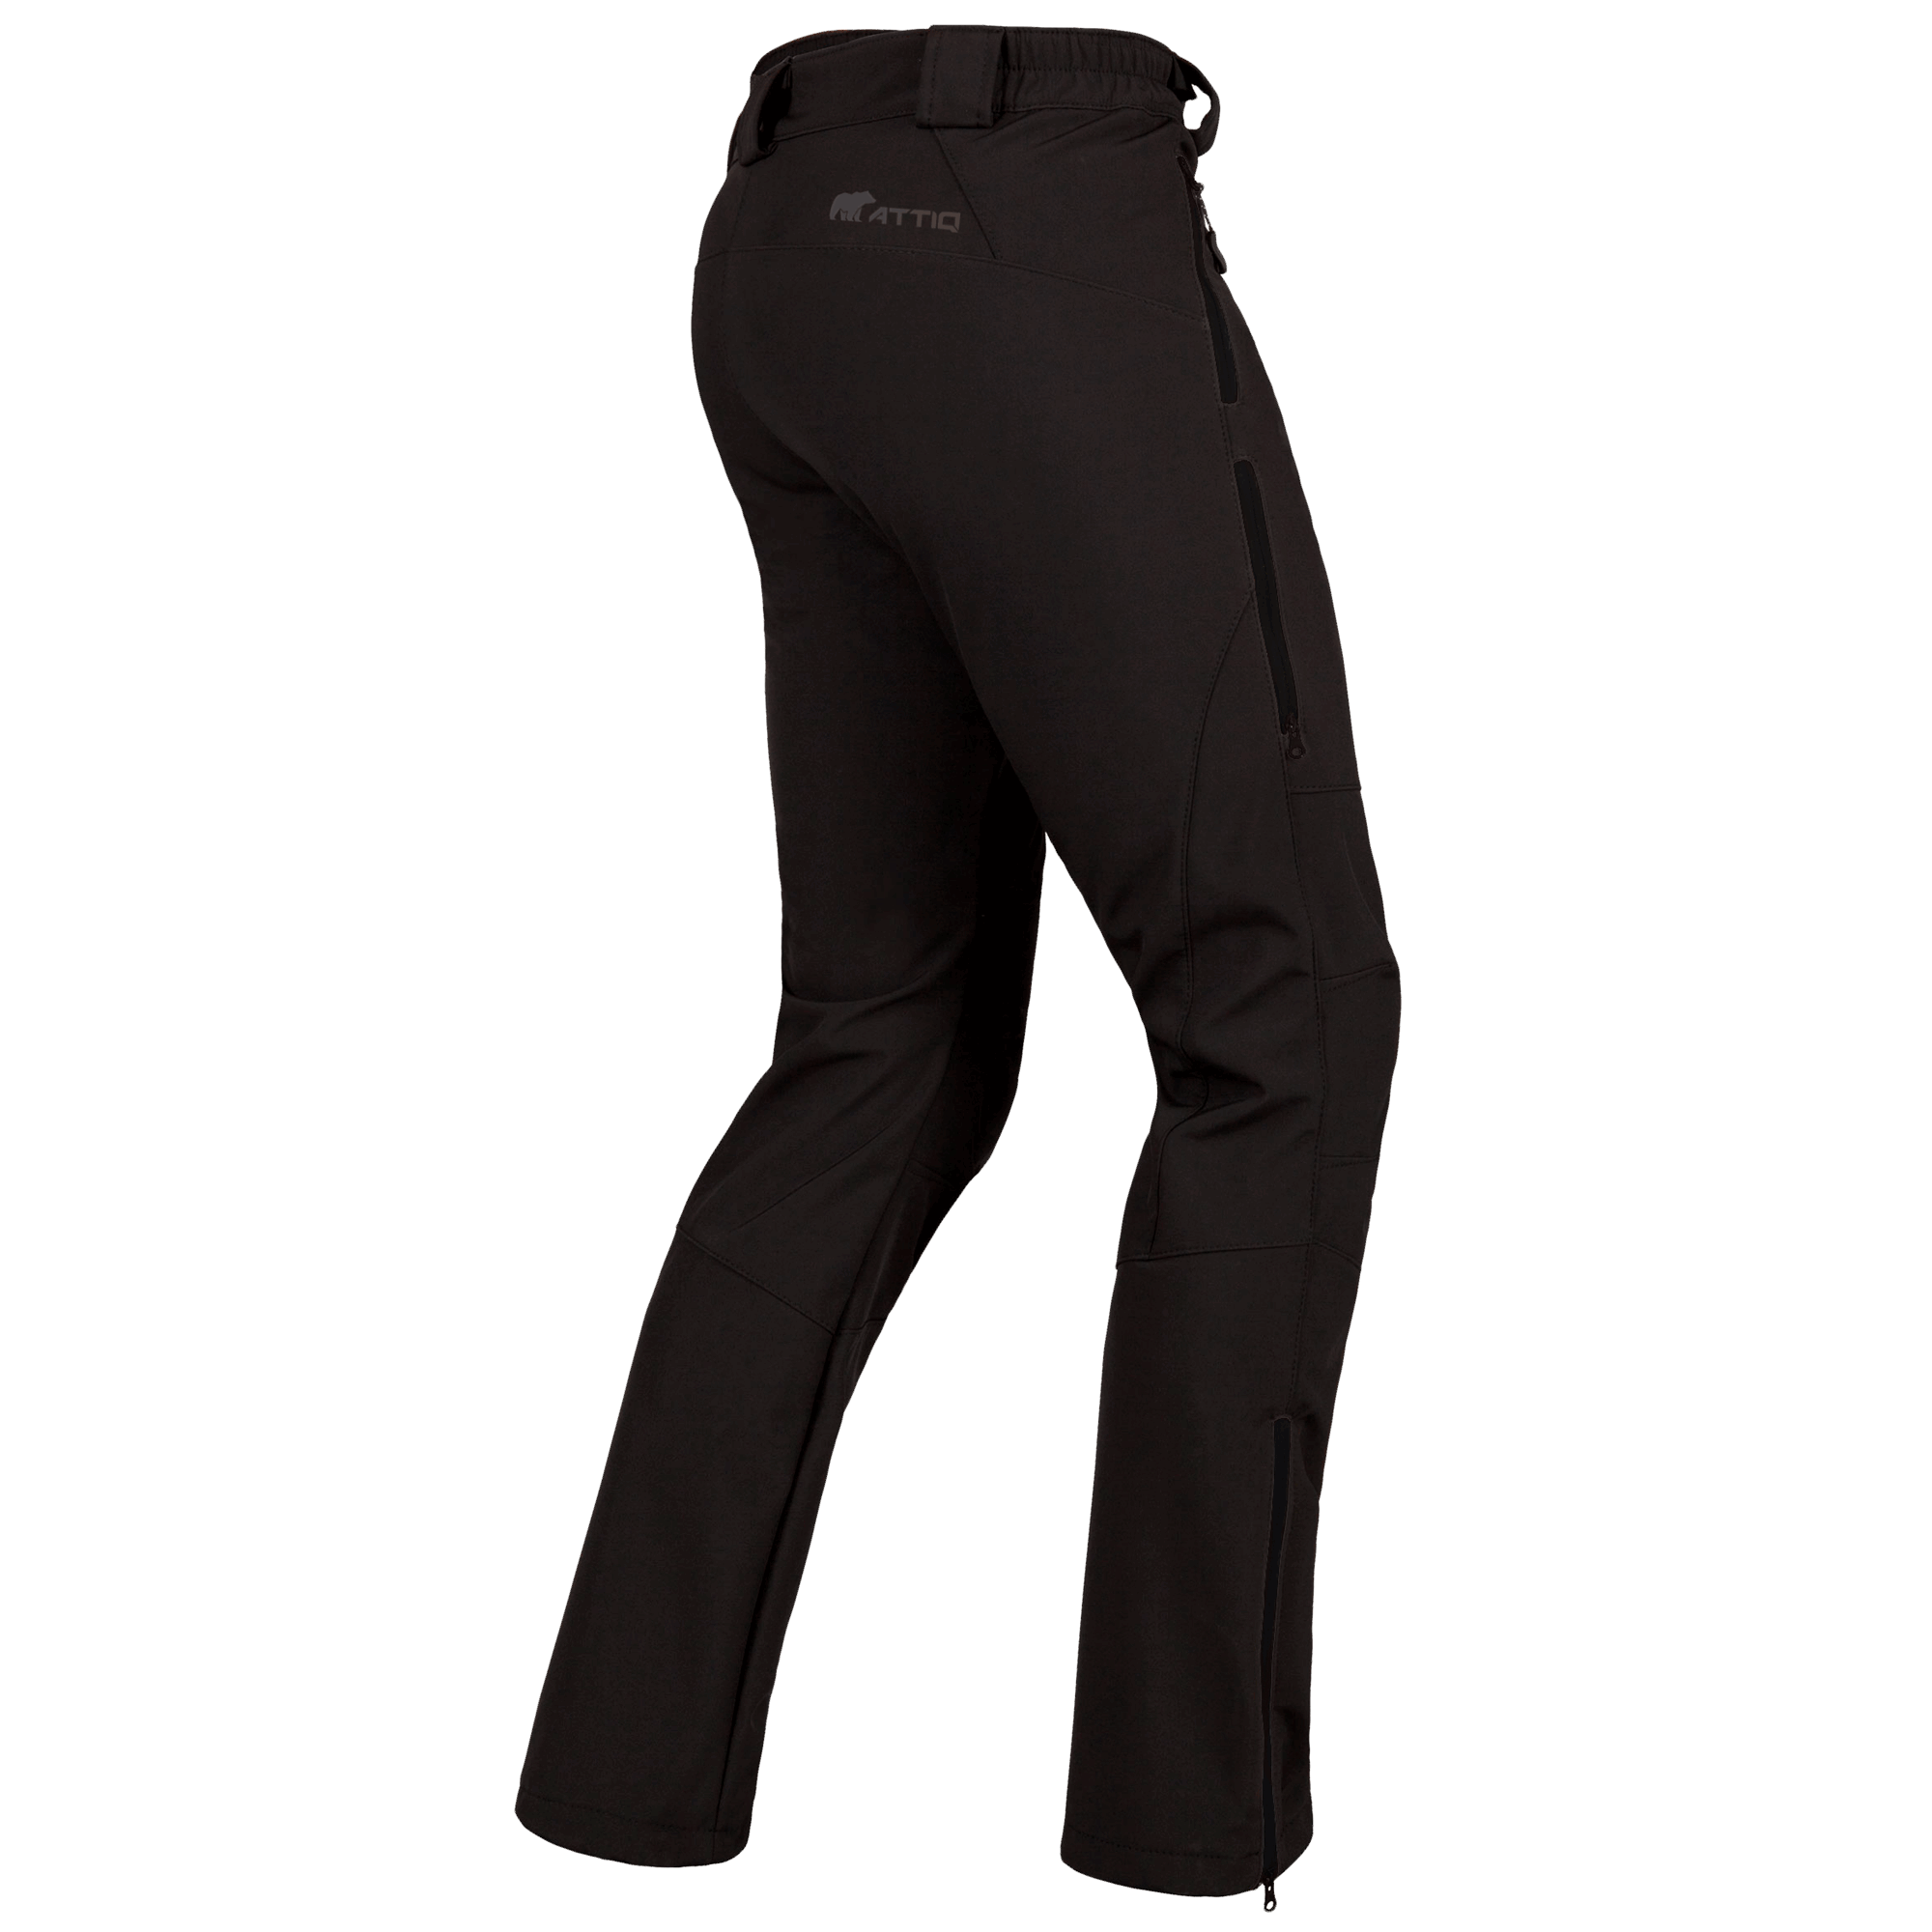 Chervo SCHULZ thermal pants in black buy online - Golf House